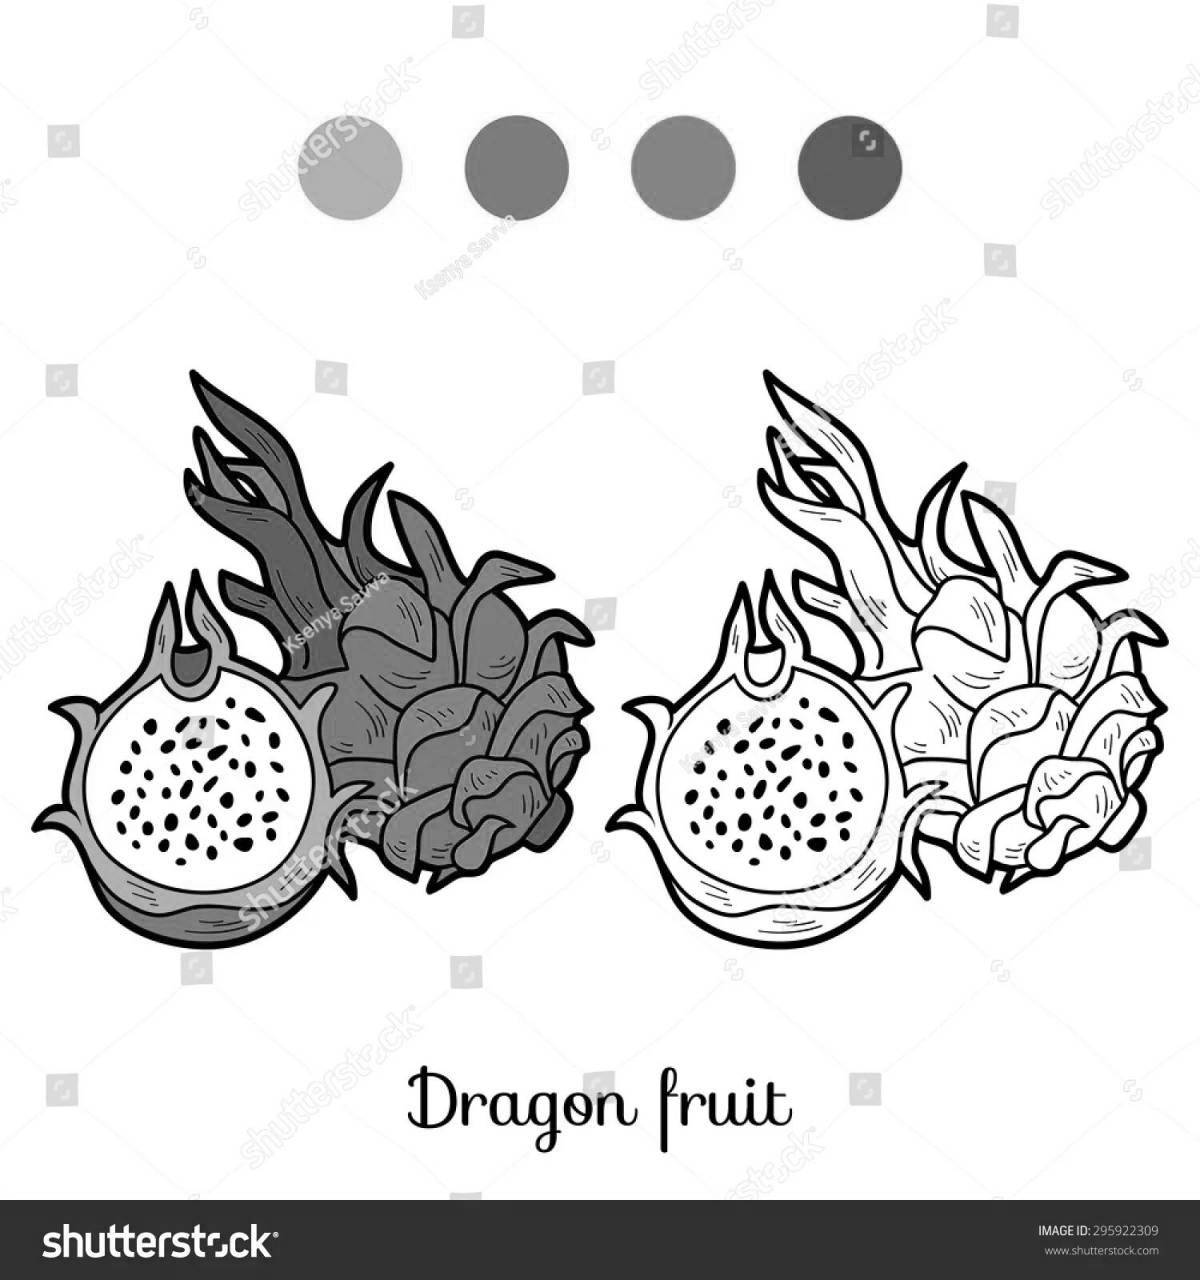 Charming dragon fruit coloring book